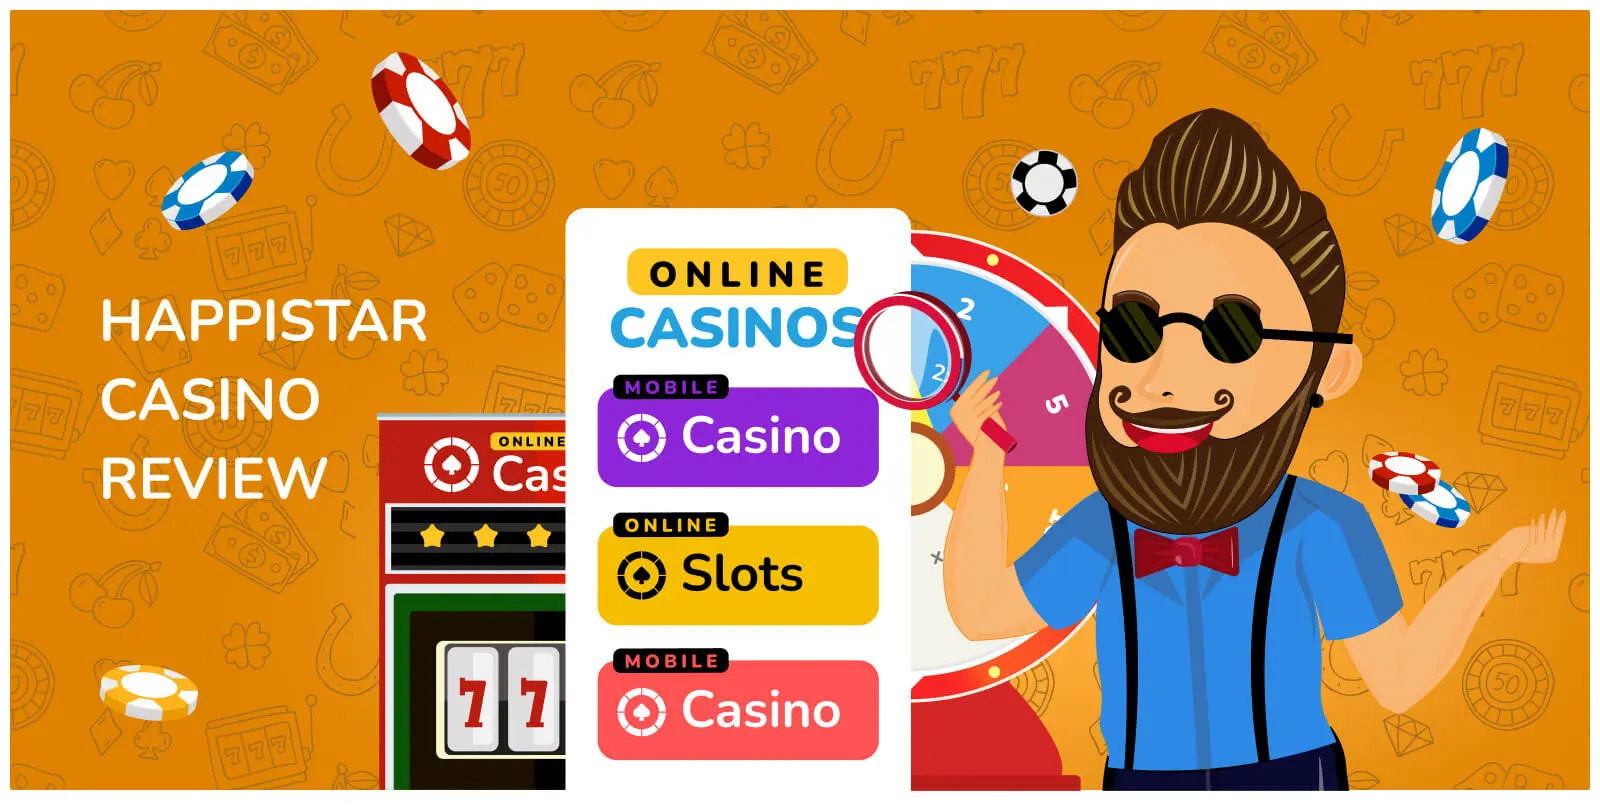 happistar casino review